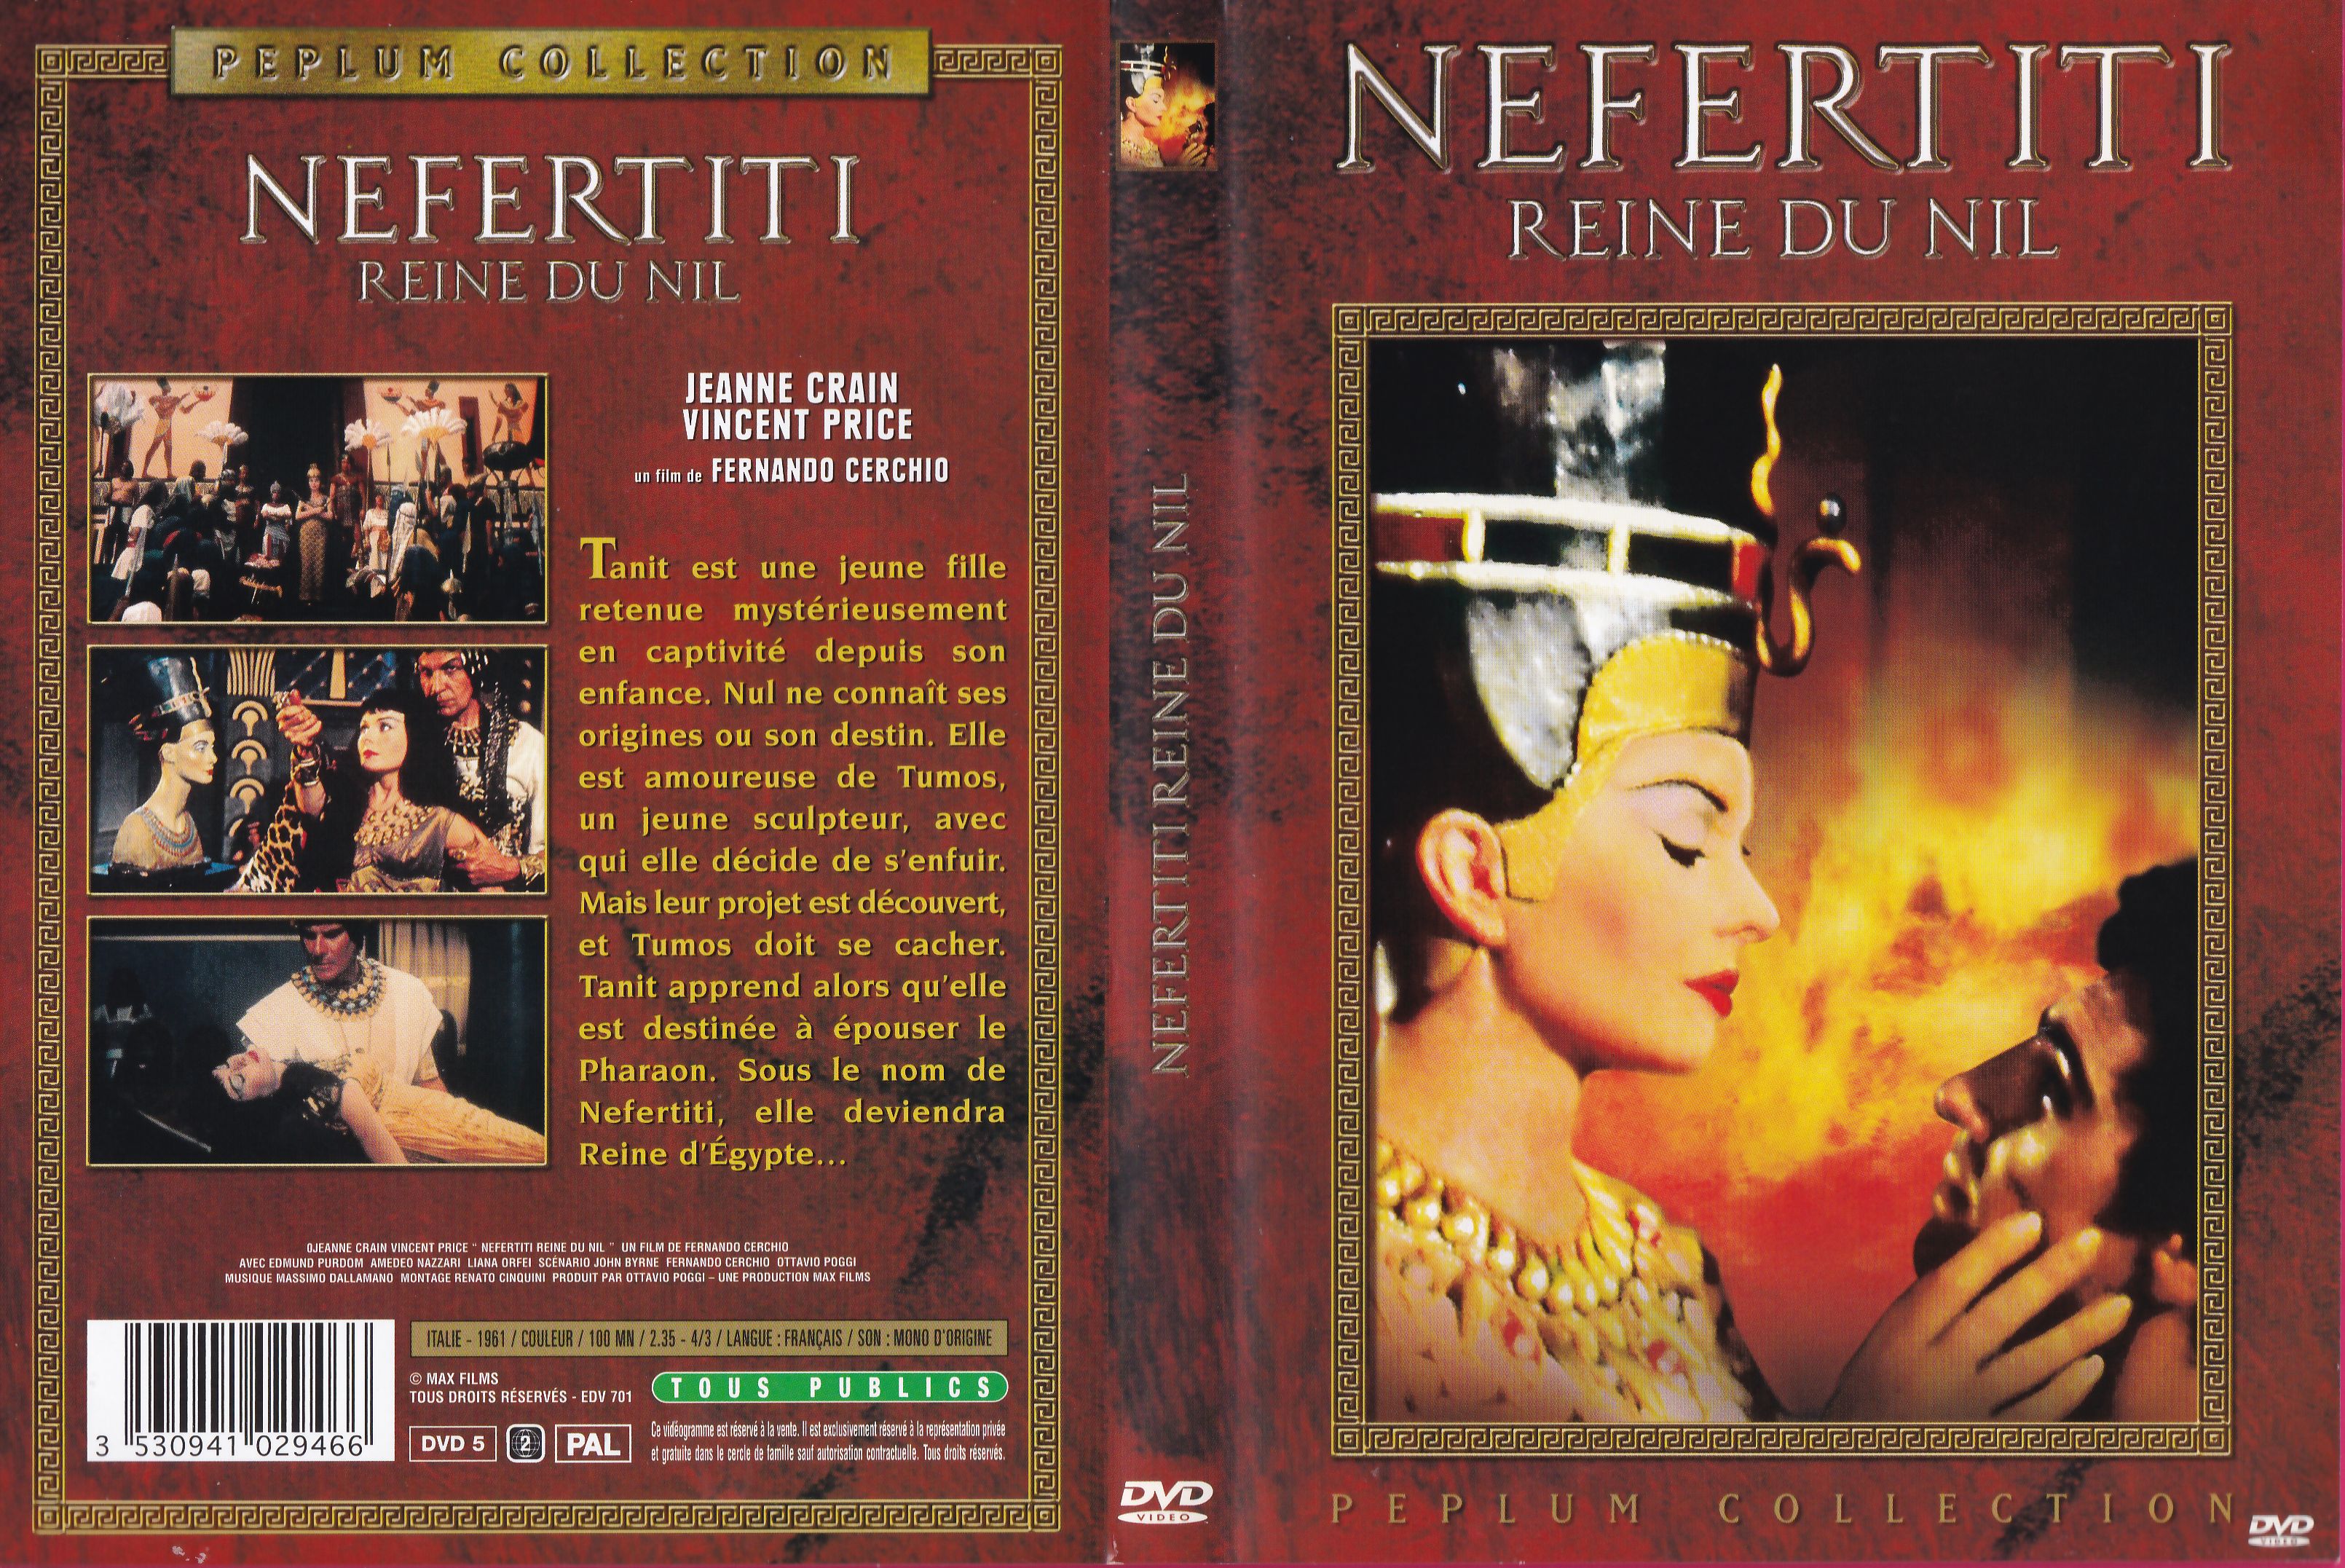 Jaquette DVD Nefertiti Reine du Nil v2 